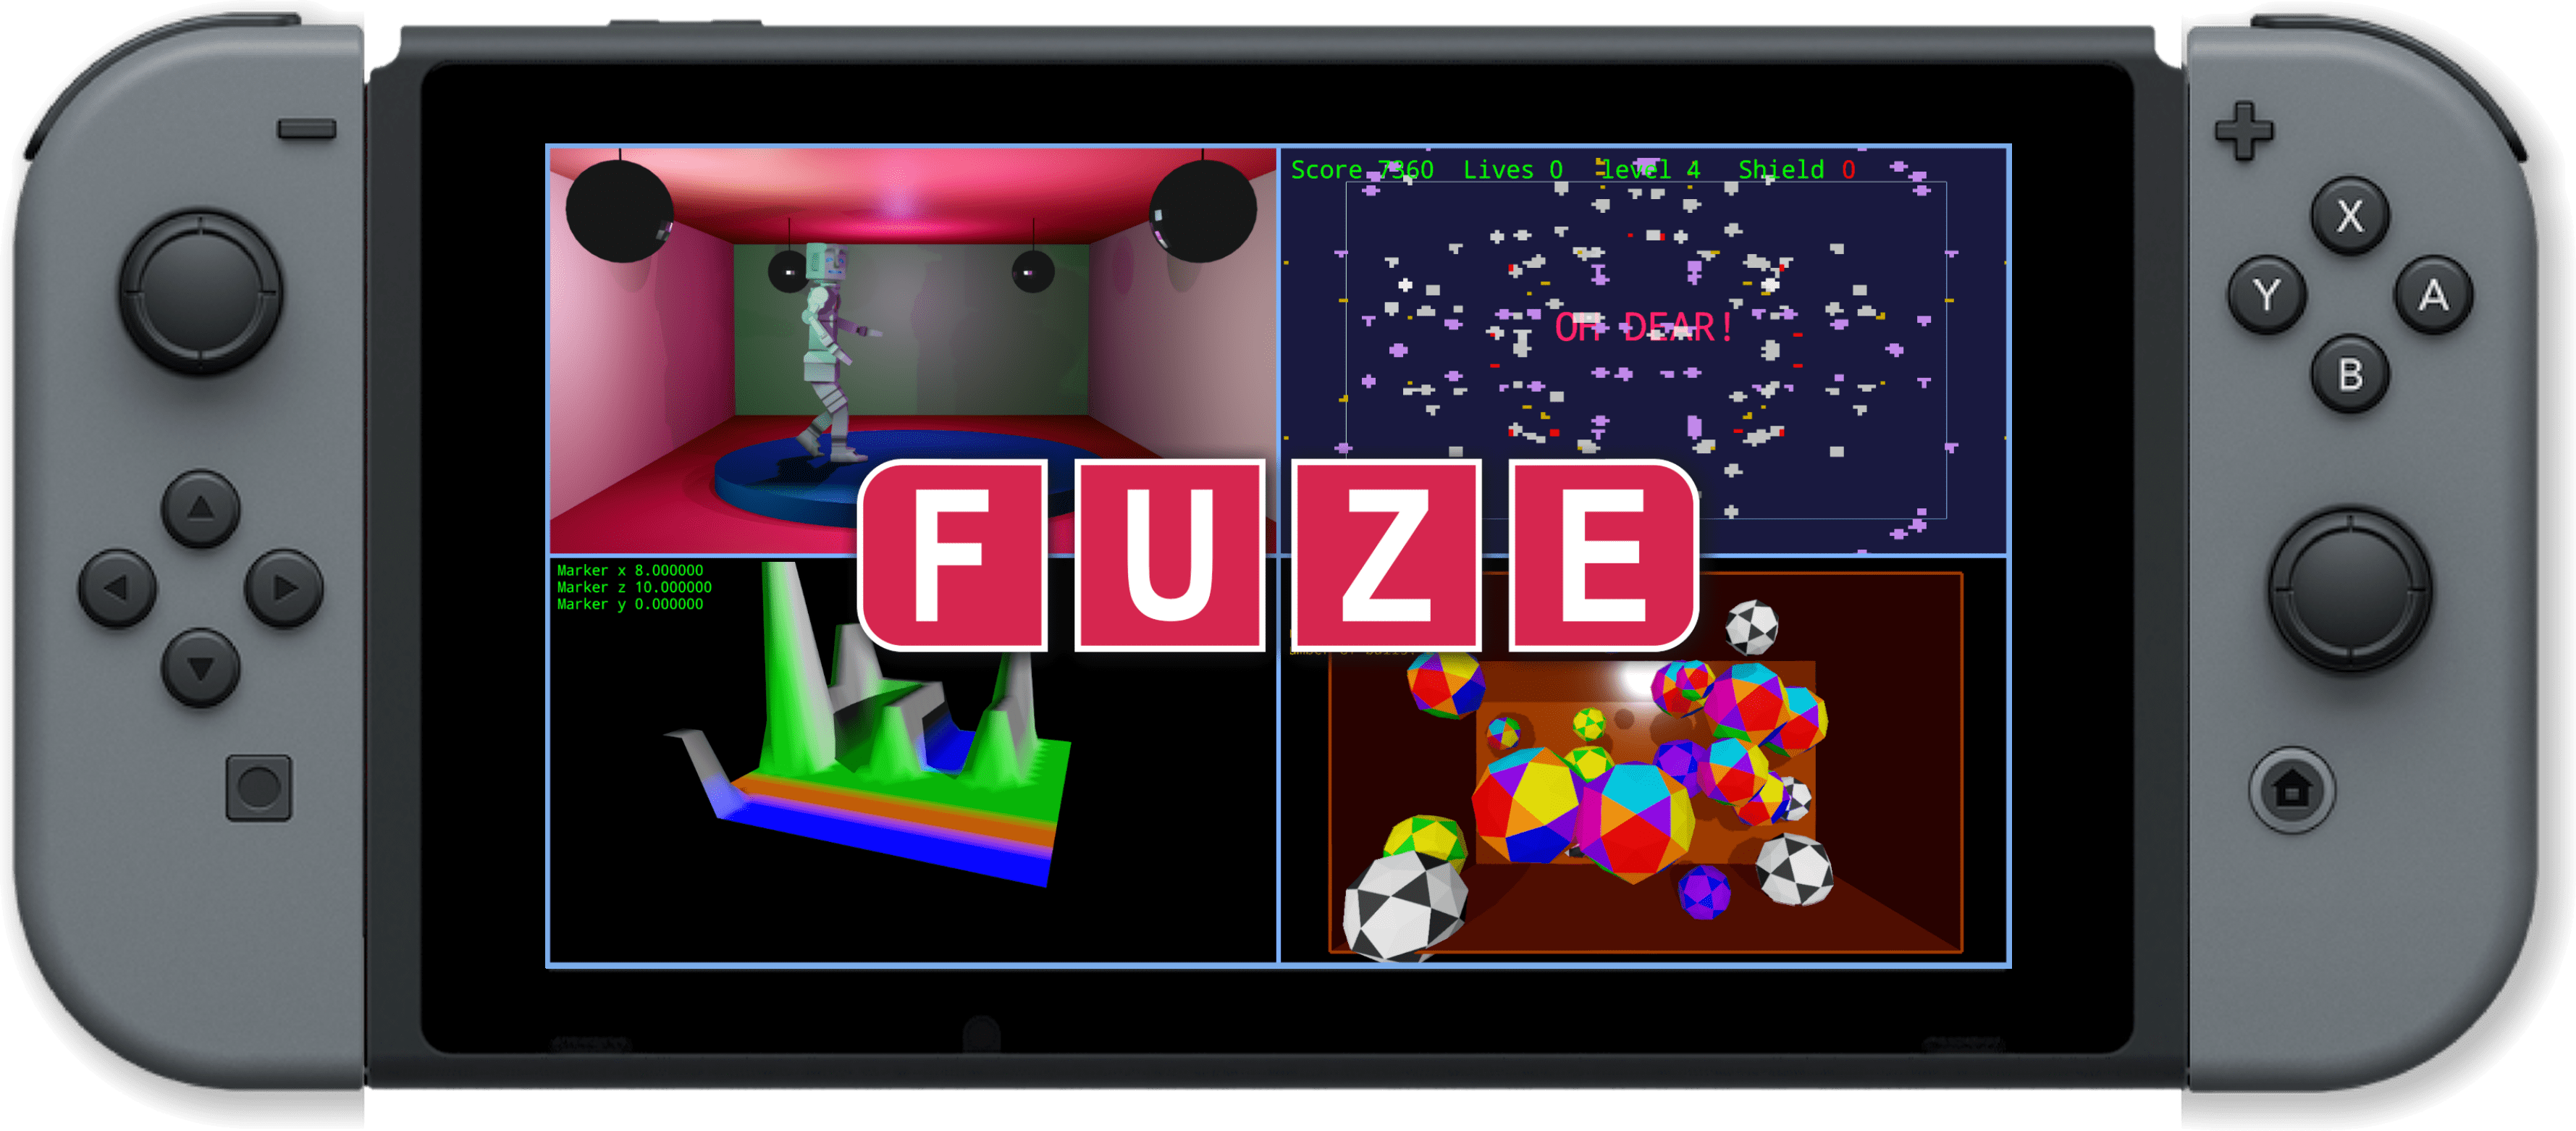 Fuze4 Nintendo Switch - Mod Nintendo Switch 6.2 0 Clipart (3558x1562), Png Download